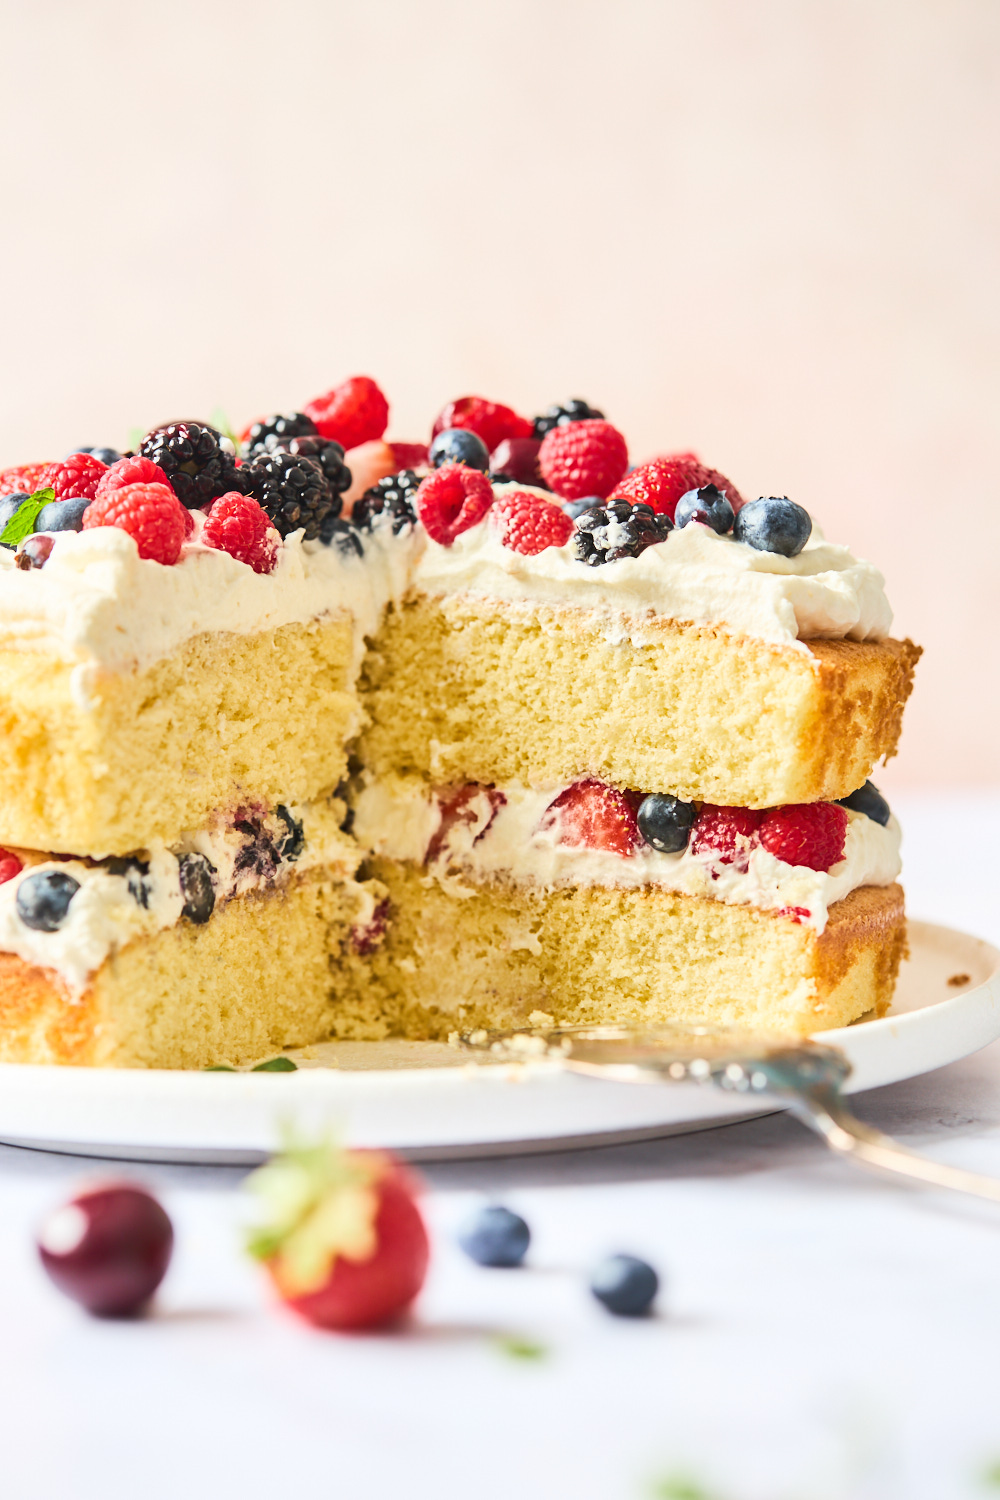 Vanilla Sponge Cake Recipe With Berries and Cream